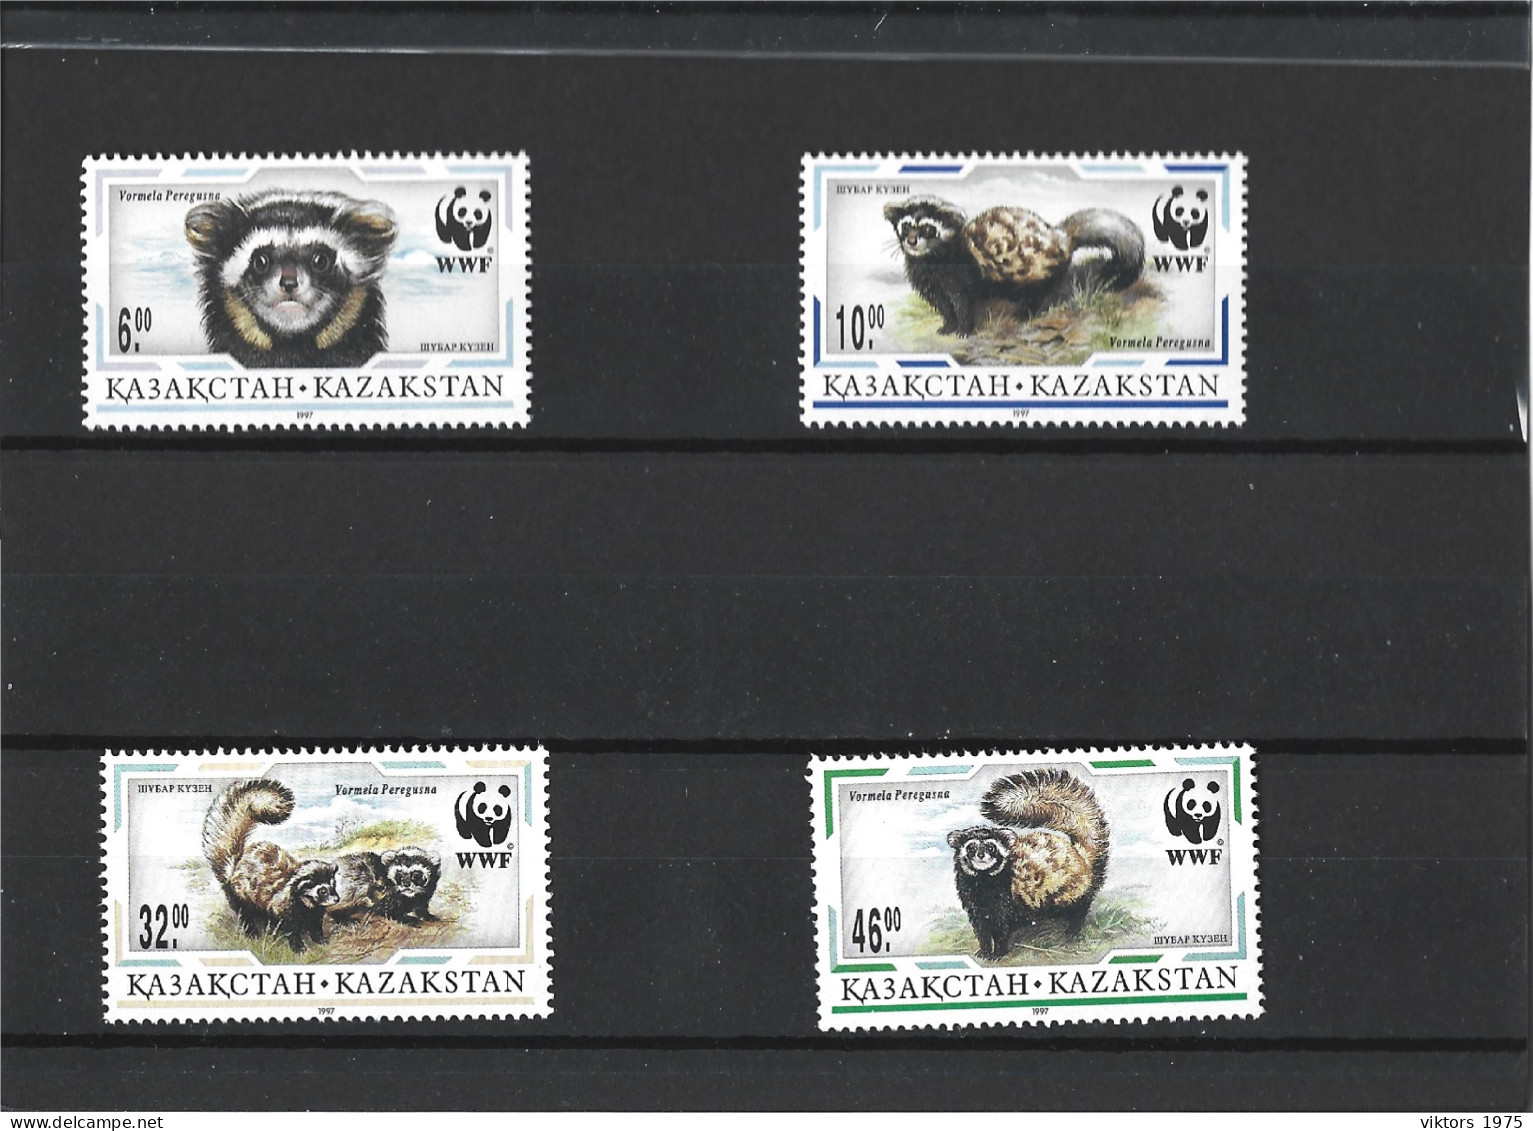 MNH Stamps Nr.154-157 In MICHEL Catalog - Kazakhstan